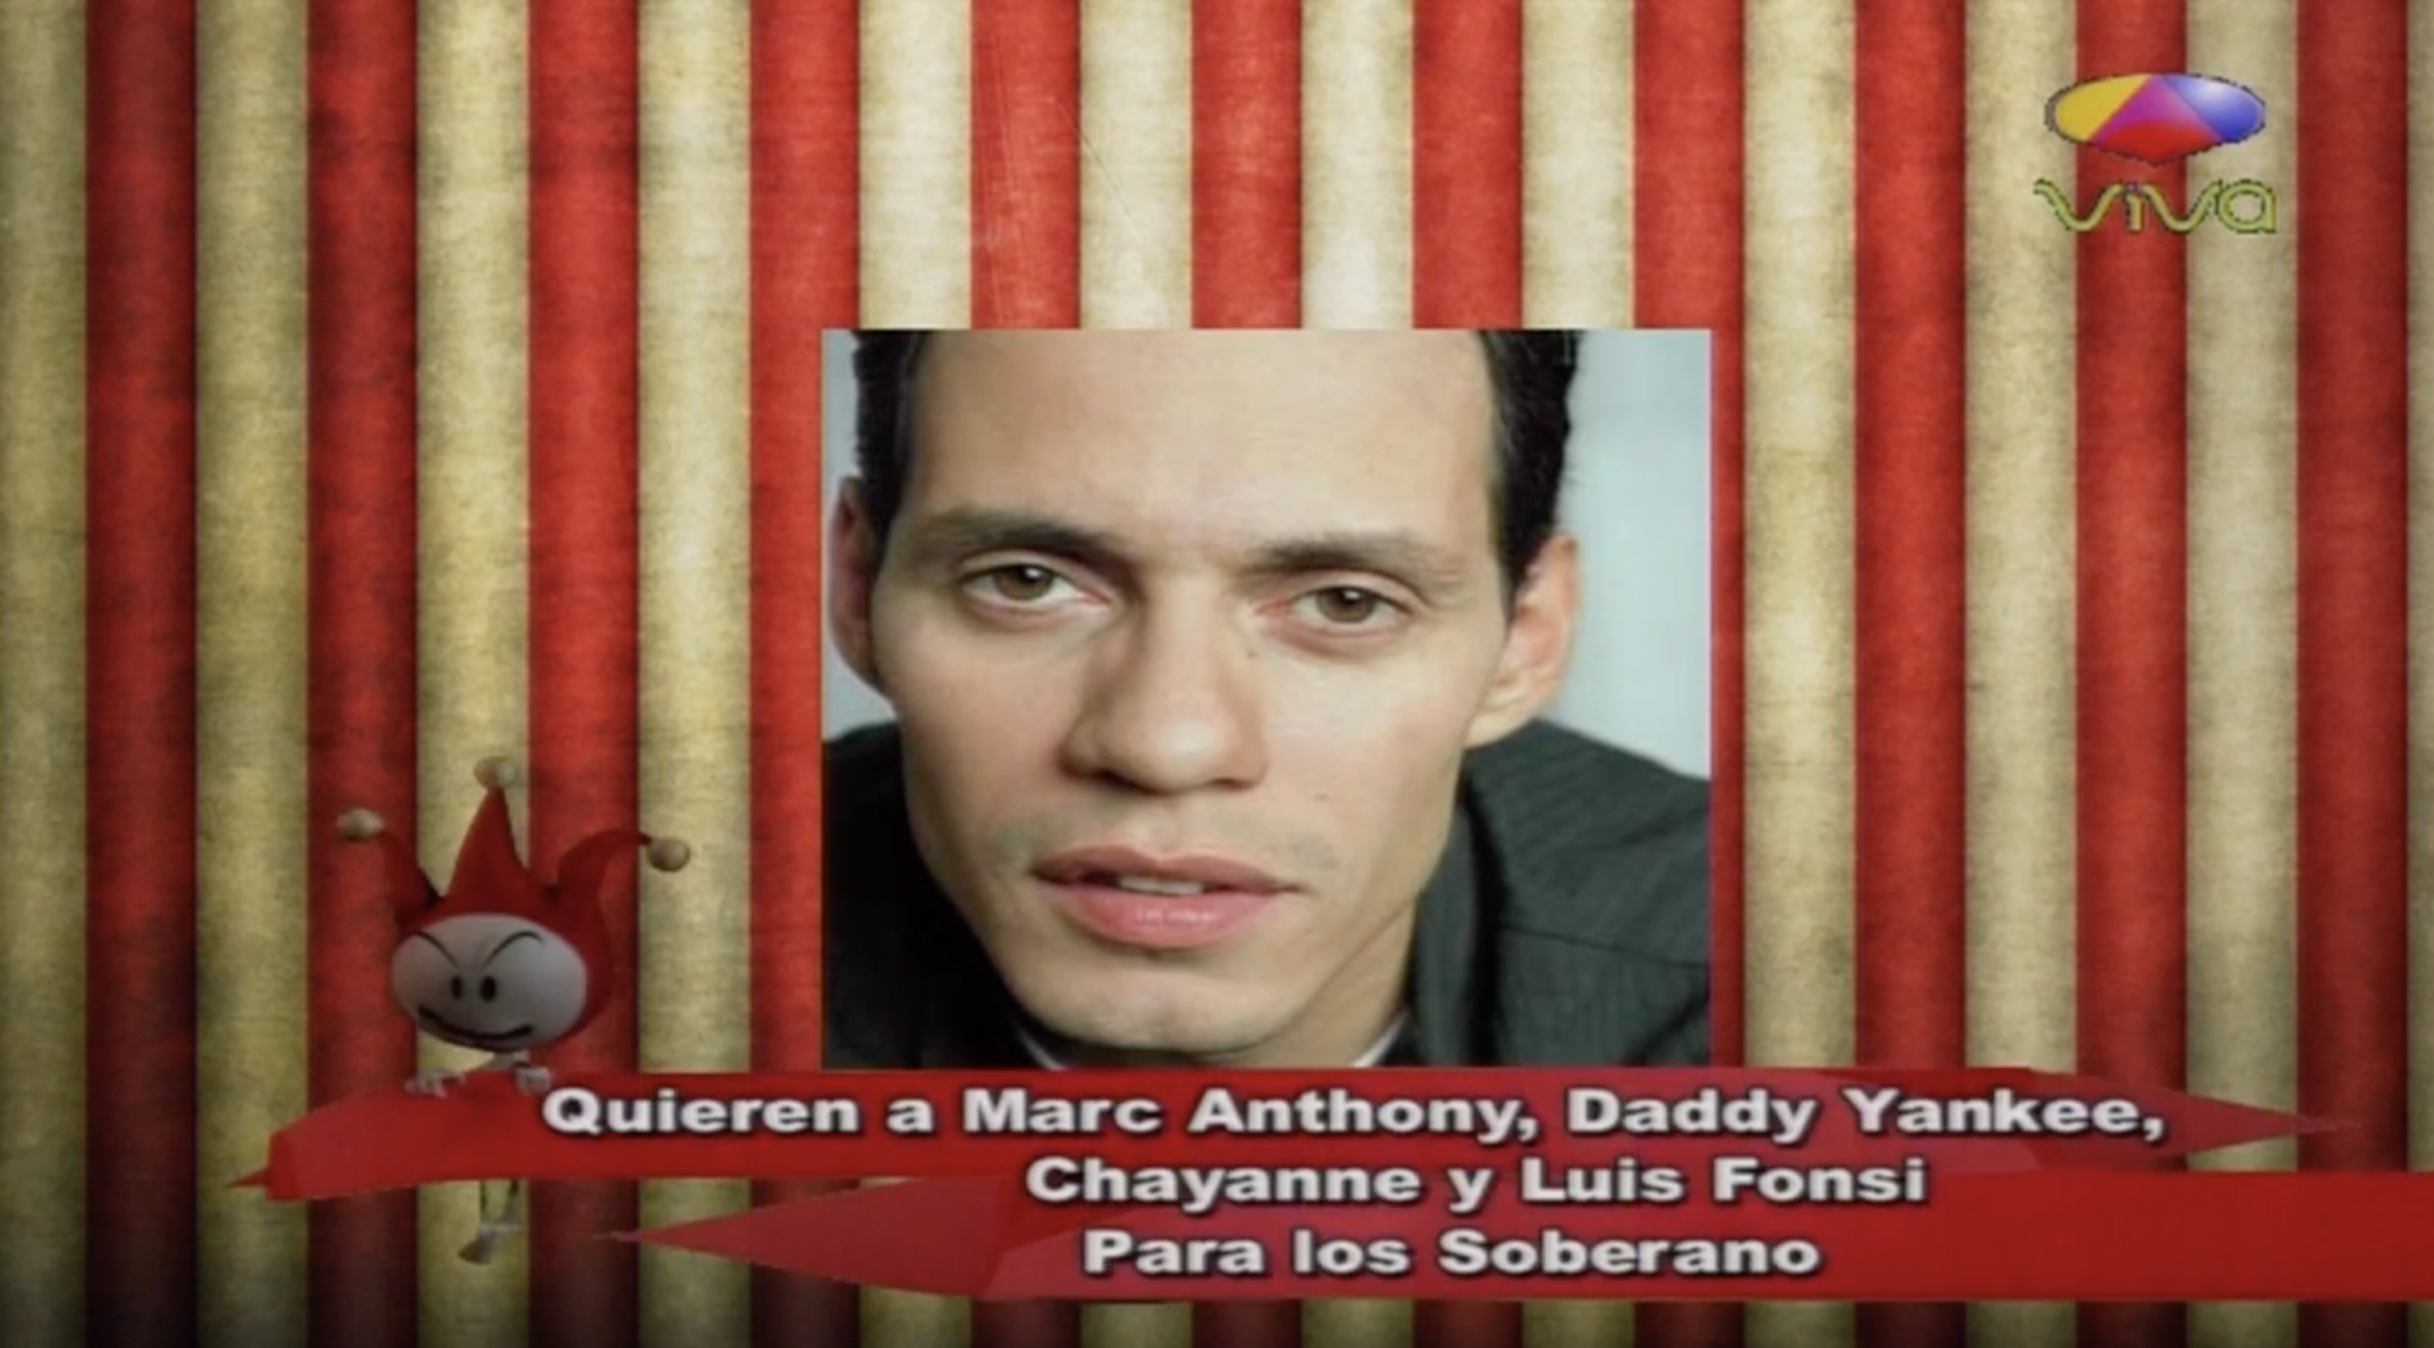 Quieren A Marc Anthony, Daddy Yankee, Chayanne, Y Luis Fonsi Para Los Soberano